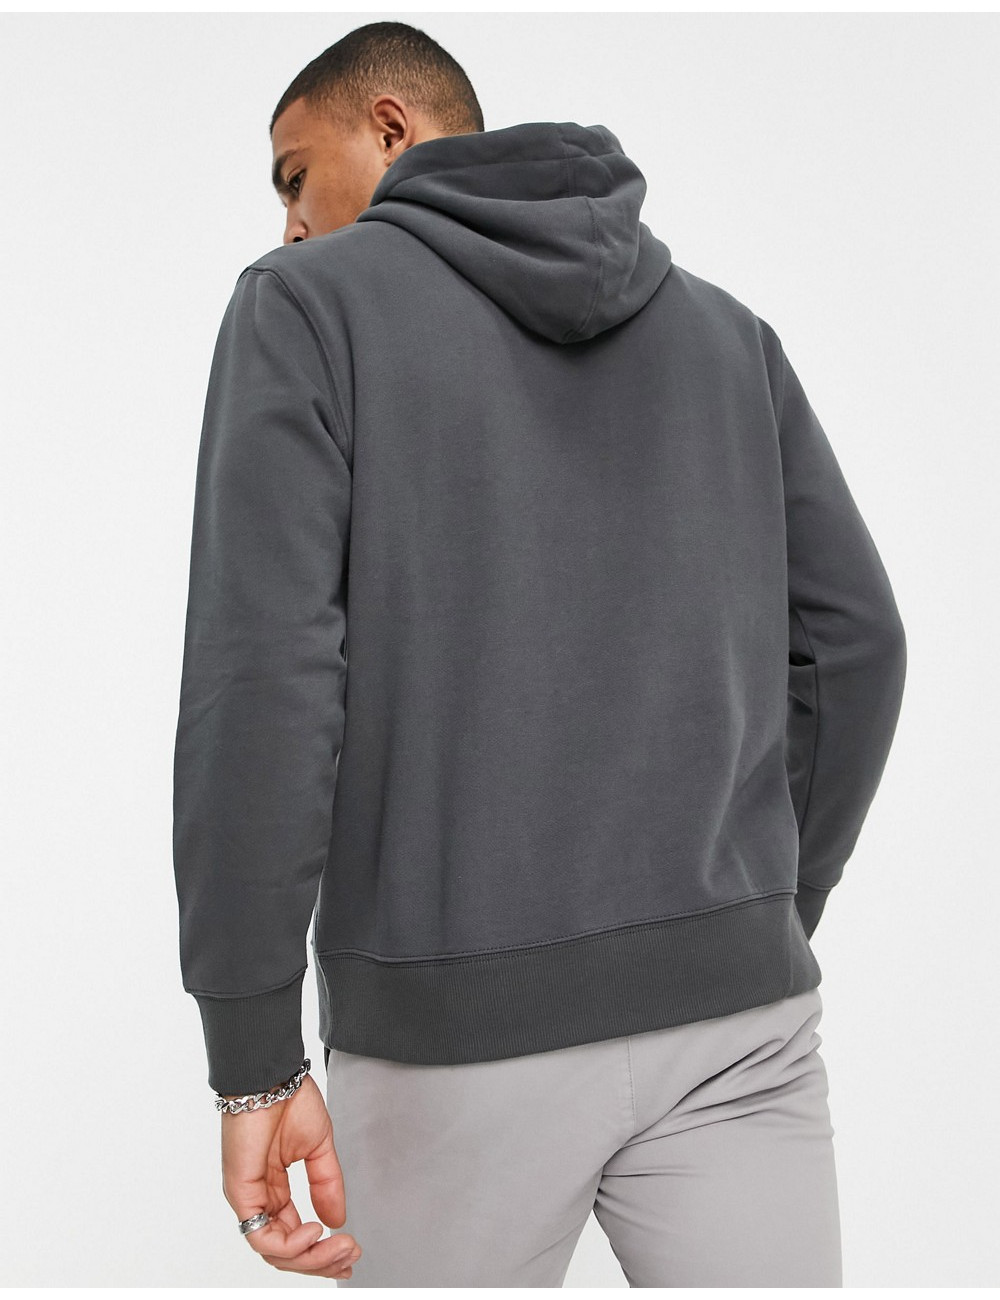 Topman classic hoodie in grey